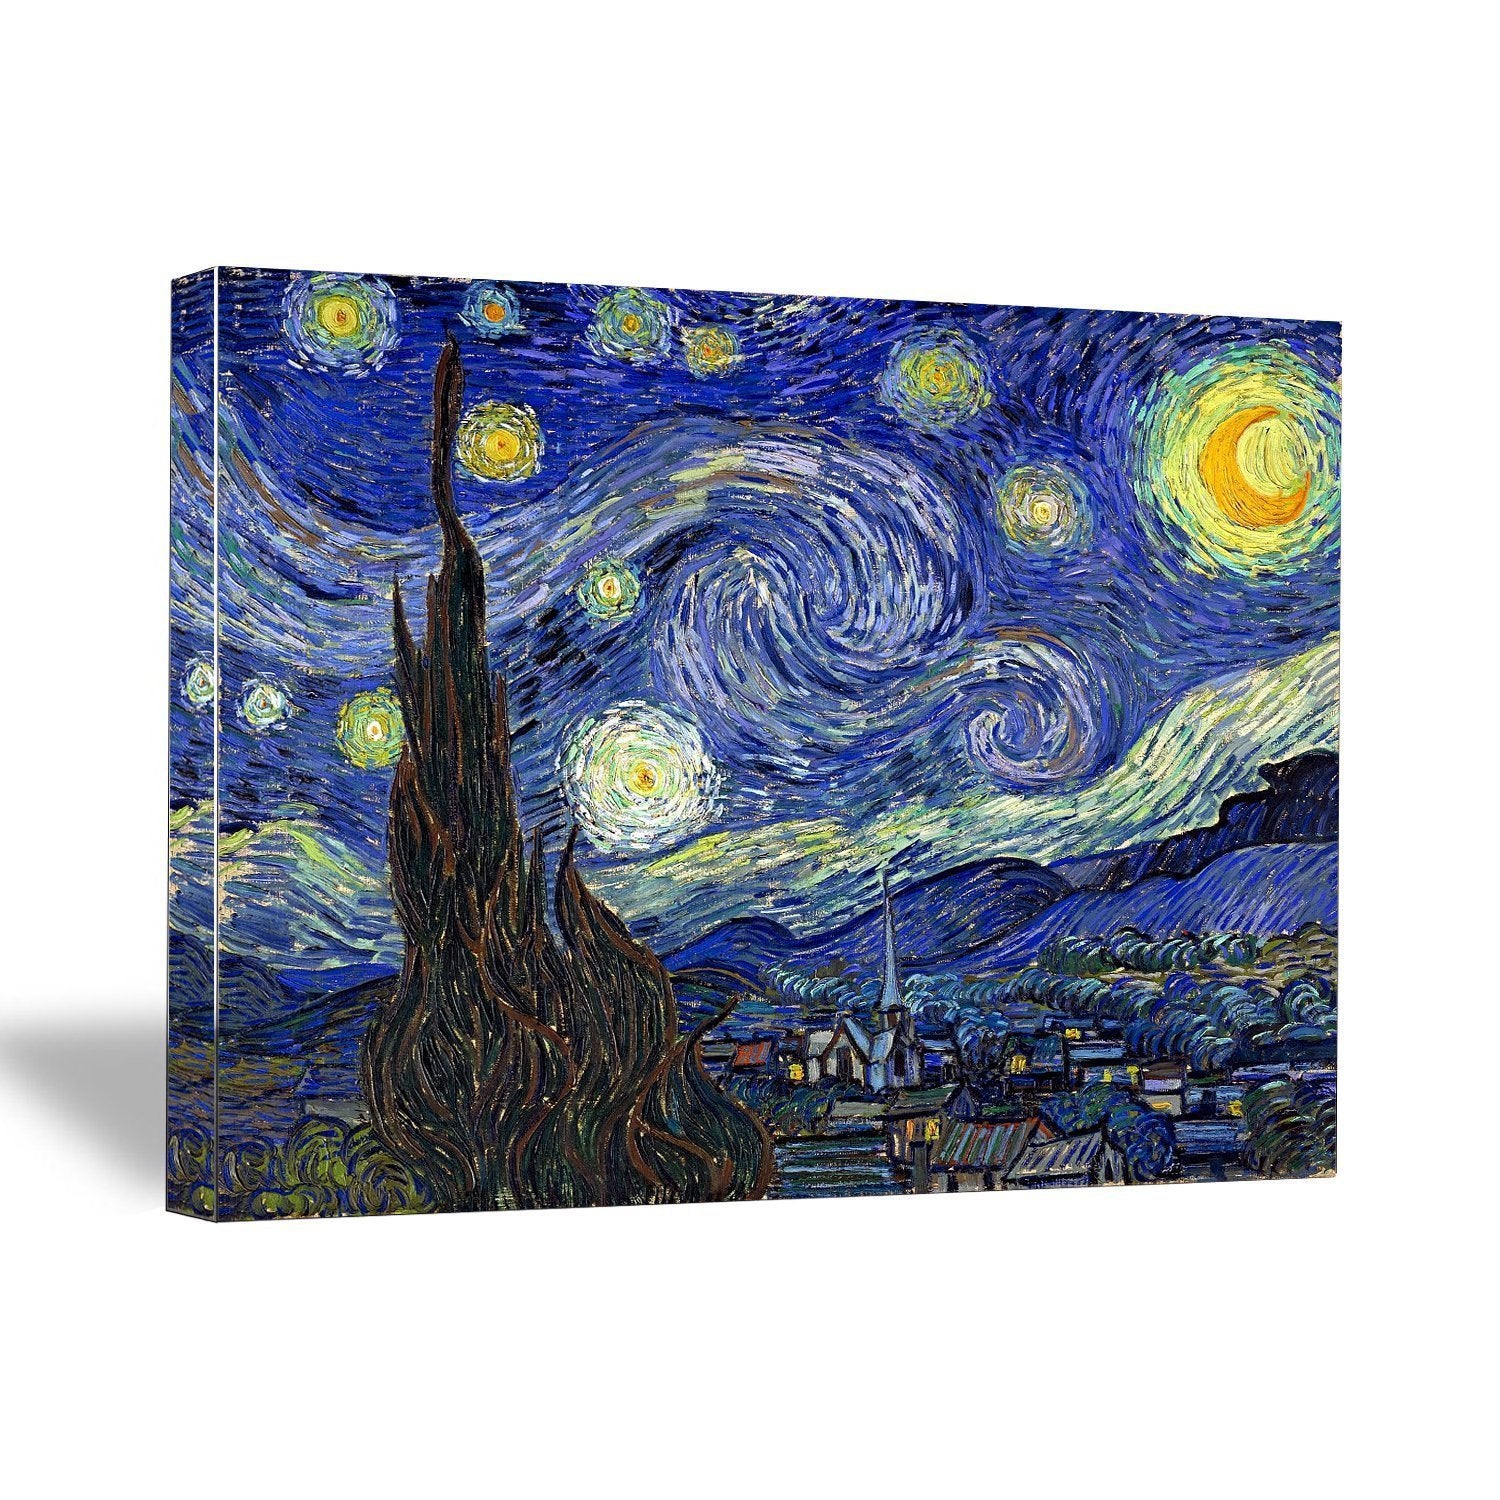 Vincent van Gogh, "Starry Night", 16" x 20" x 1.5" Canvas Gallery Wrap Print